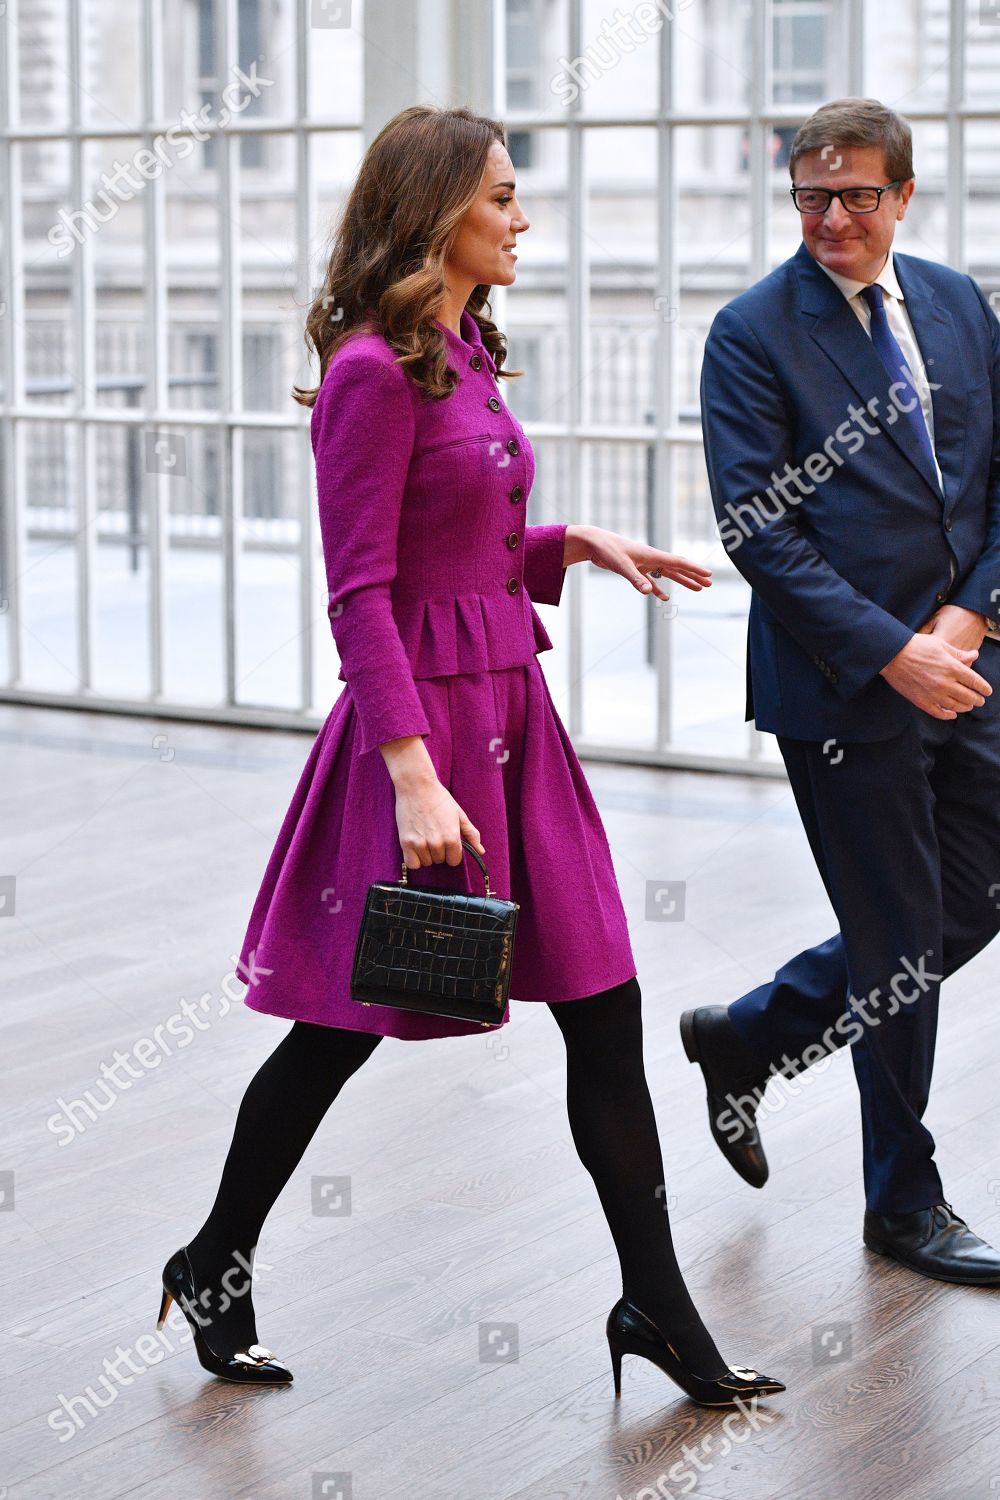 catherine-duchess-of-cambridge-visit-to-the-royal-opera-house-london-uk-shutterstock-editorial-10063903d.jpg